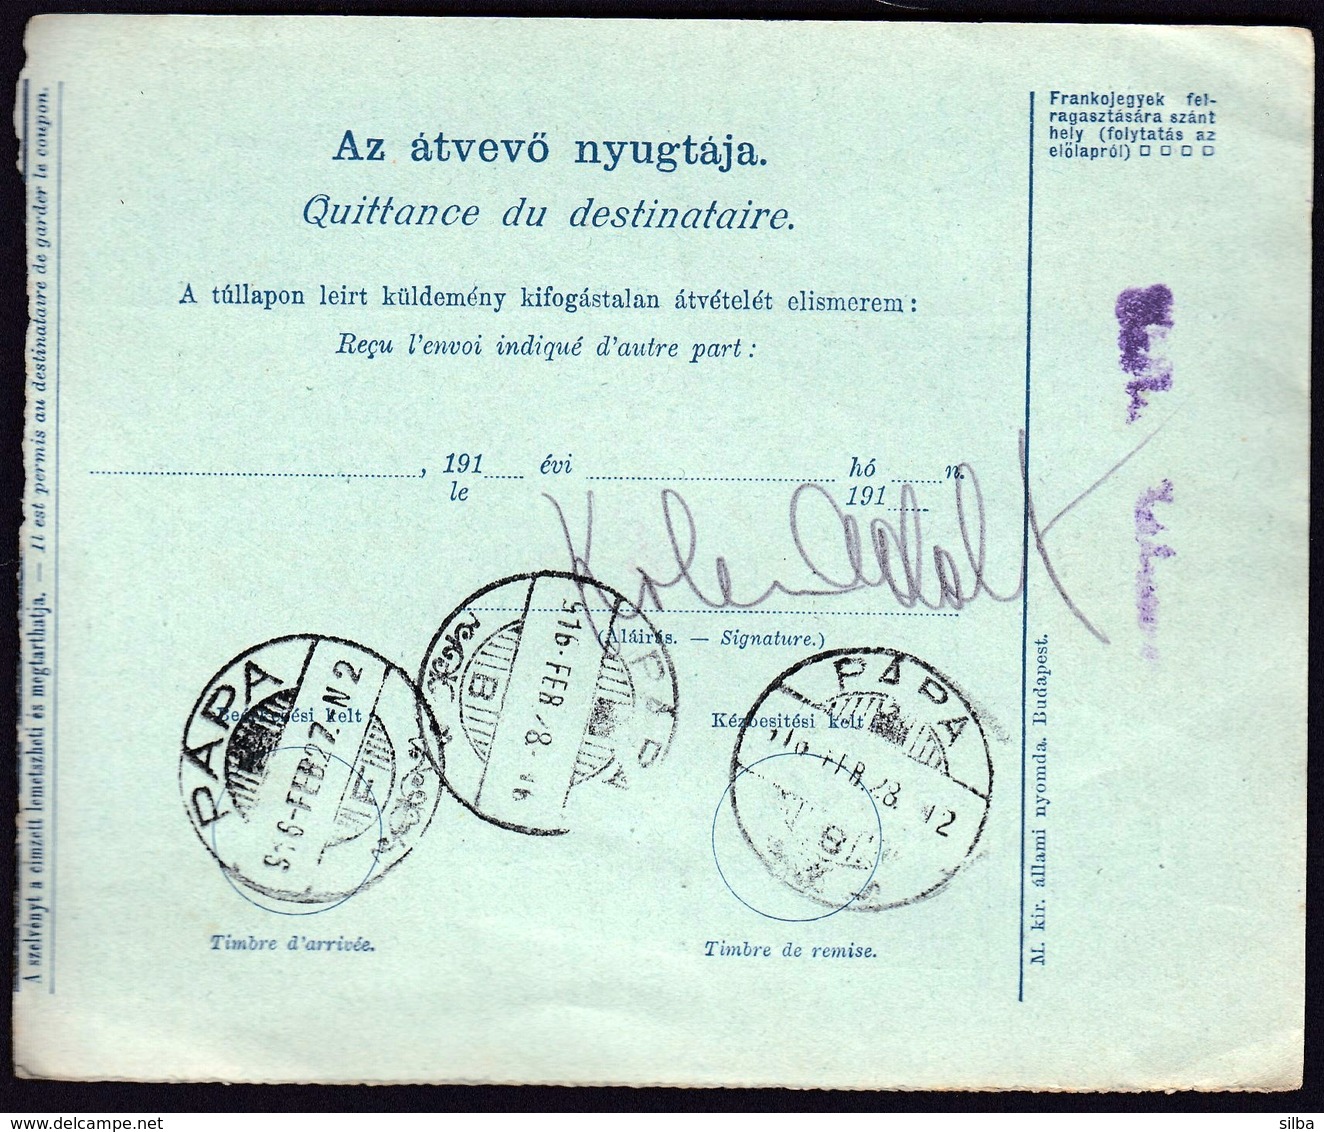 Hungary Tiszafured 1916 / Parcel Post, Postai Szallitolevel, Bulletin D' Expedition / To Papa - Postpaketten